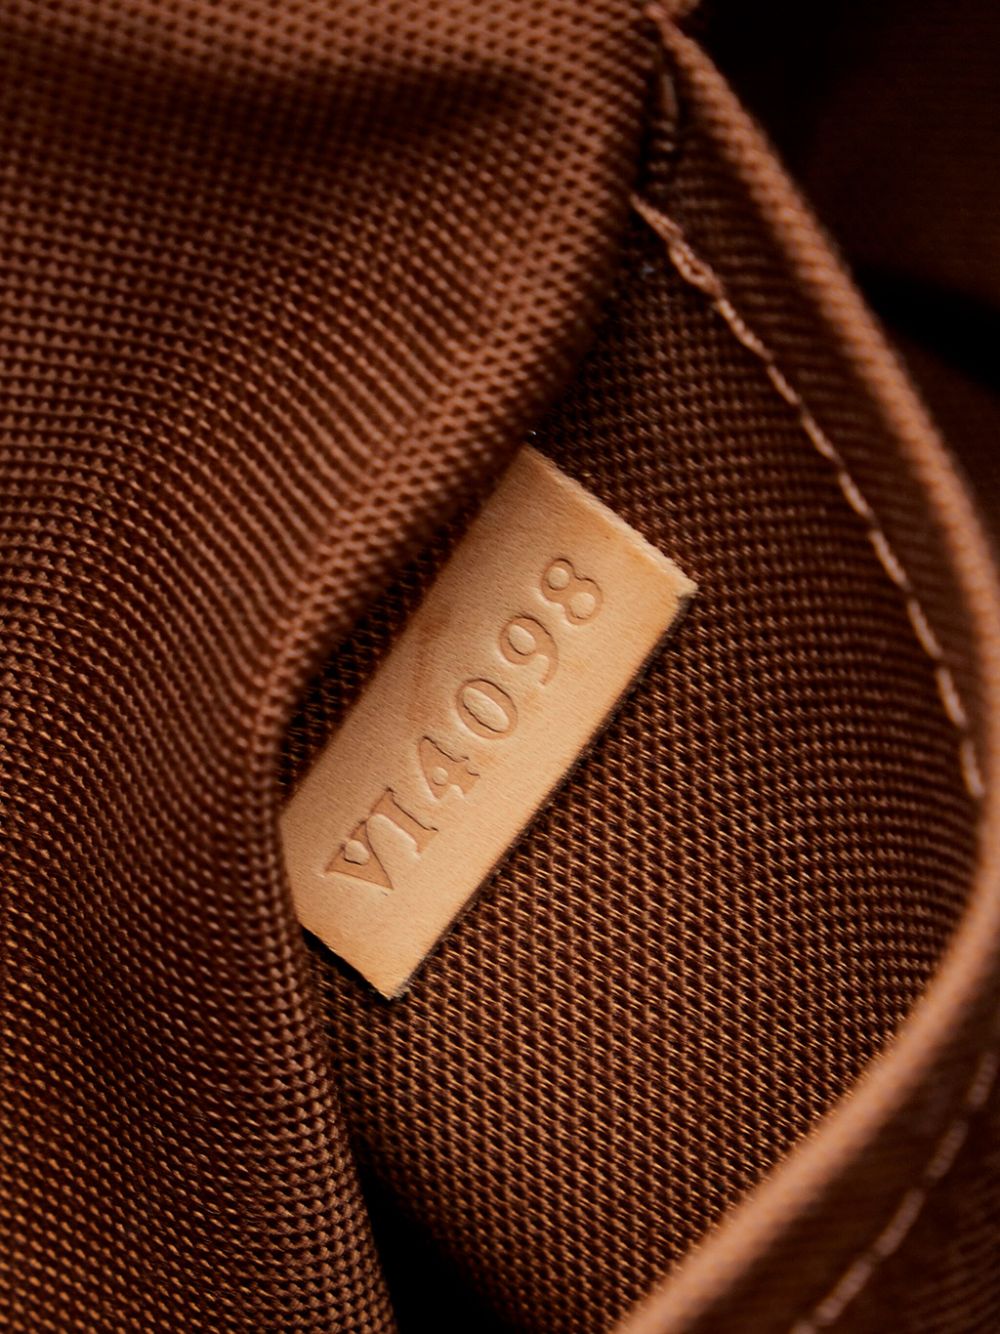 Louis Vuitton 2008 Odeon mm Shoulder Bag